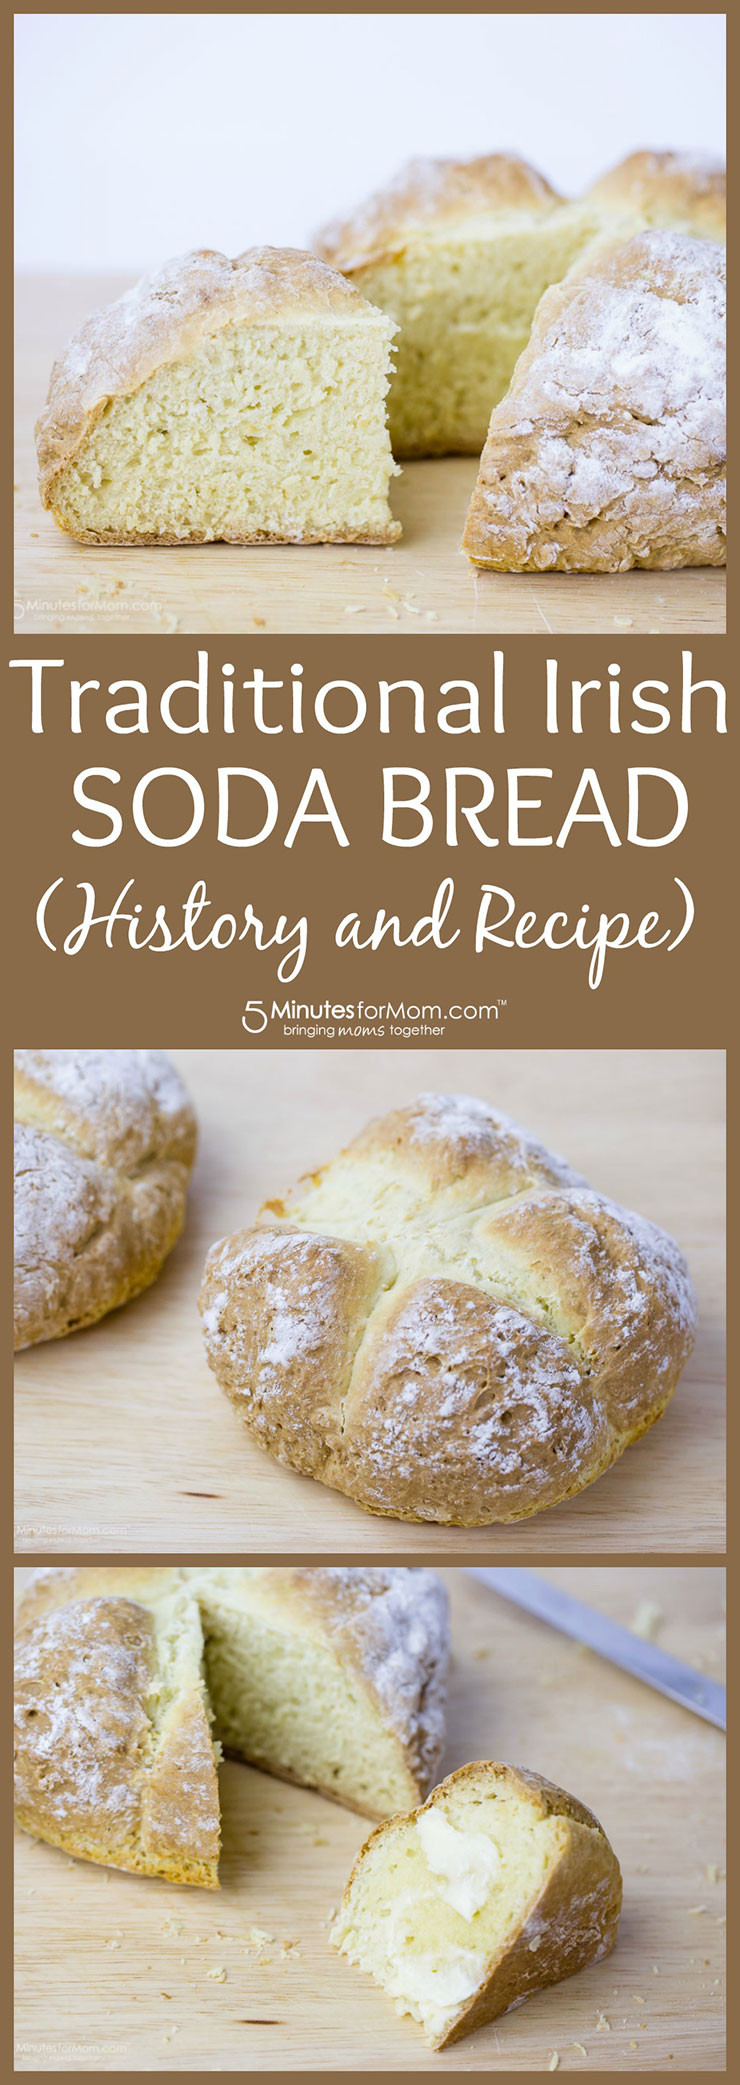 Traditional Irish Soda Bread Recipe
 Traditional Irish Soda Bread Recipe and History 5